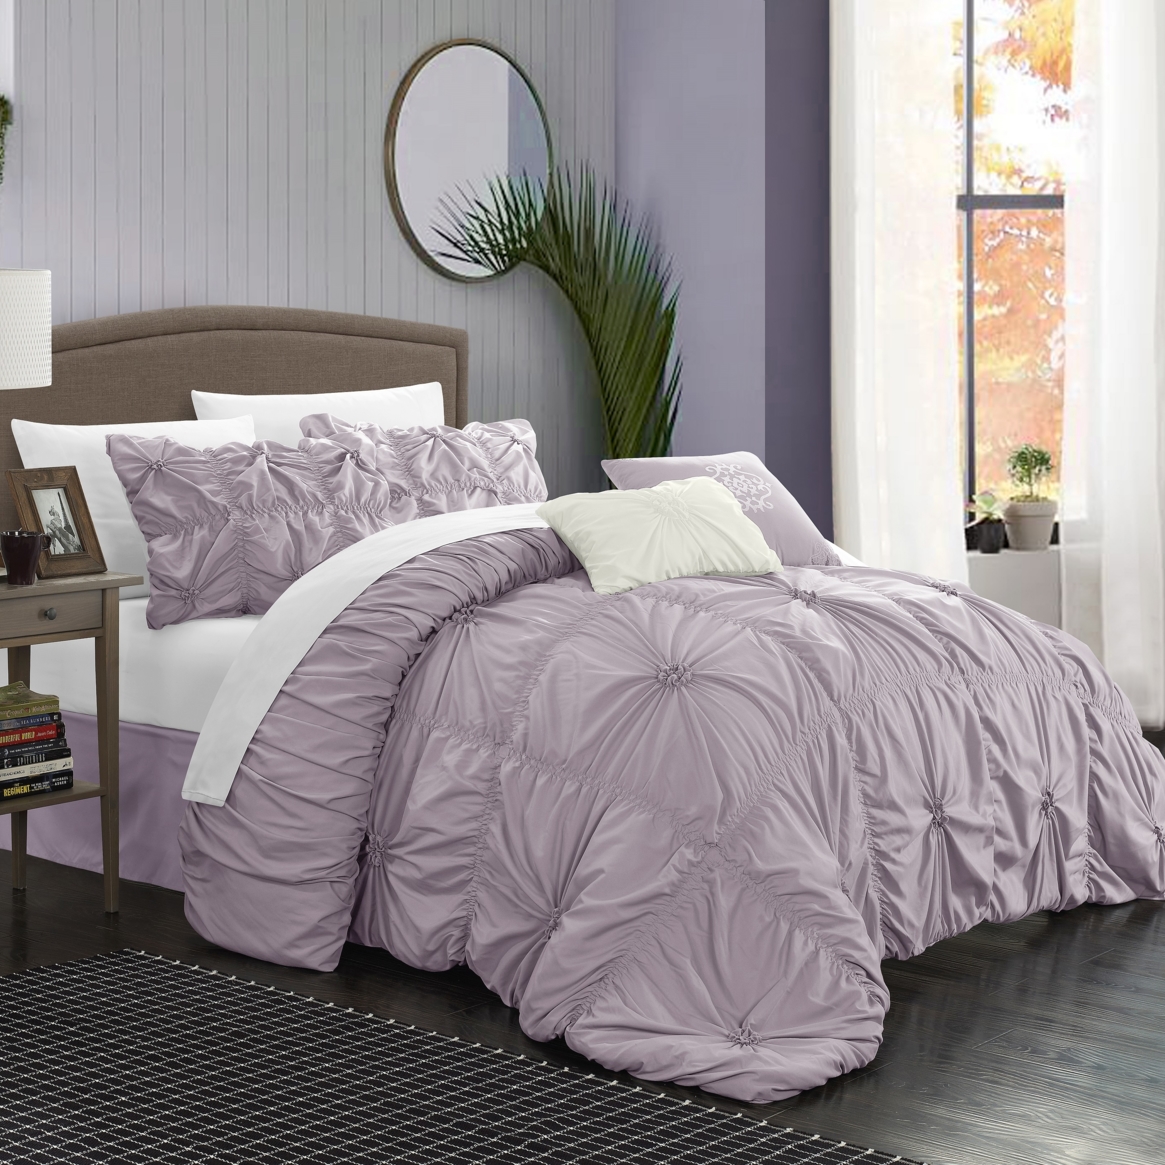 Hilton 10 Piece Comforter Set Floral Pinch Pleated Ruffled Designer Embellished Bed In A Bag Bedding - Silver, King